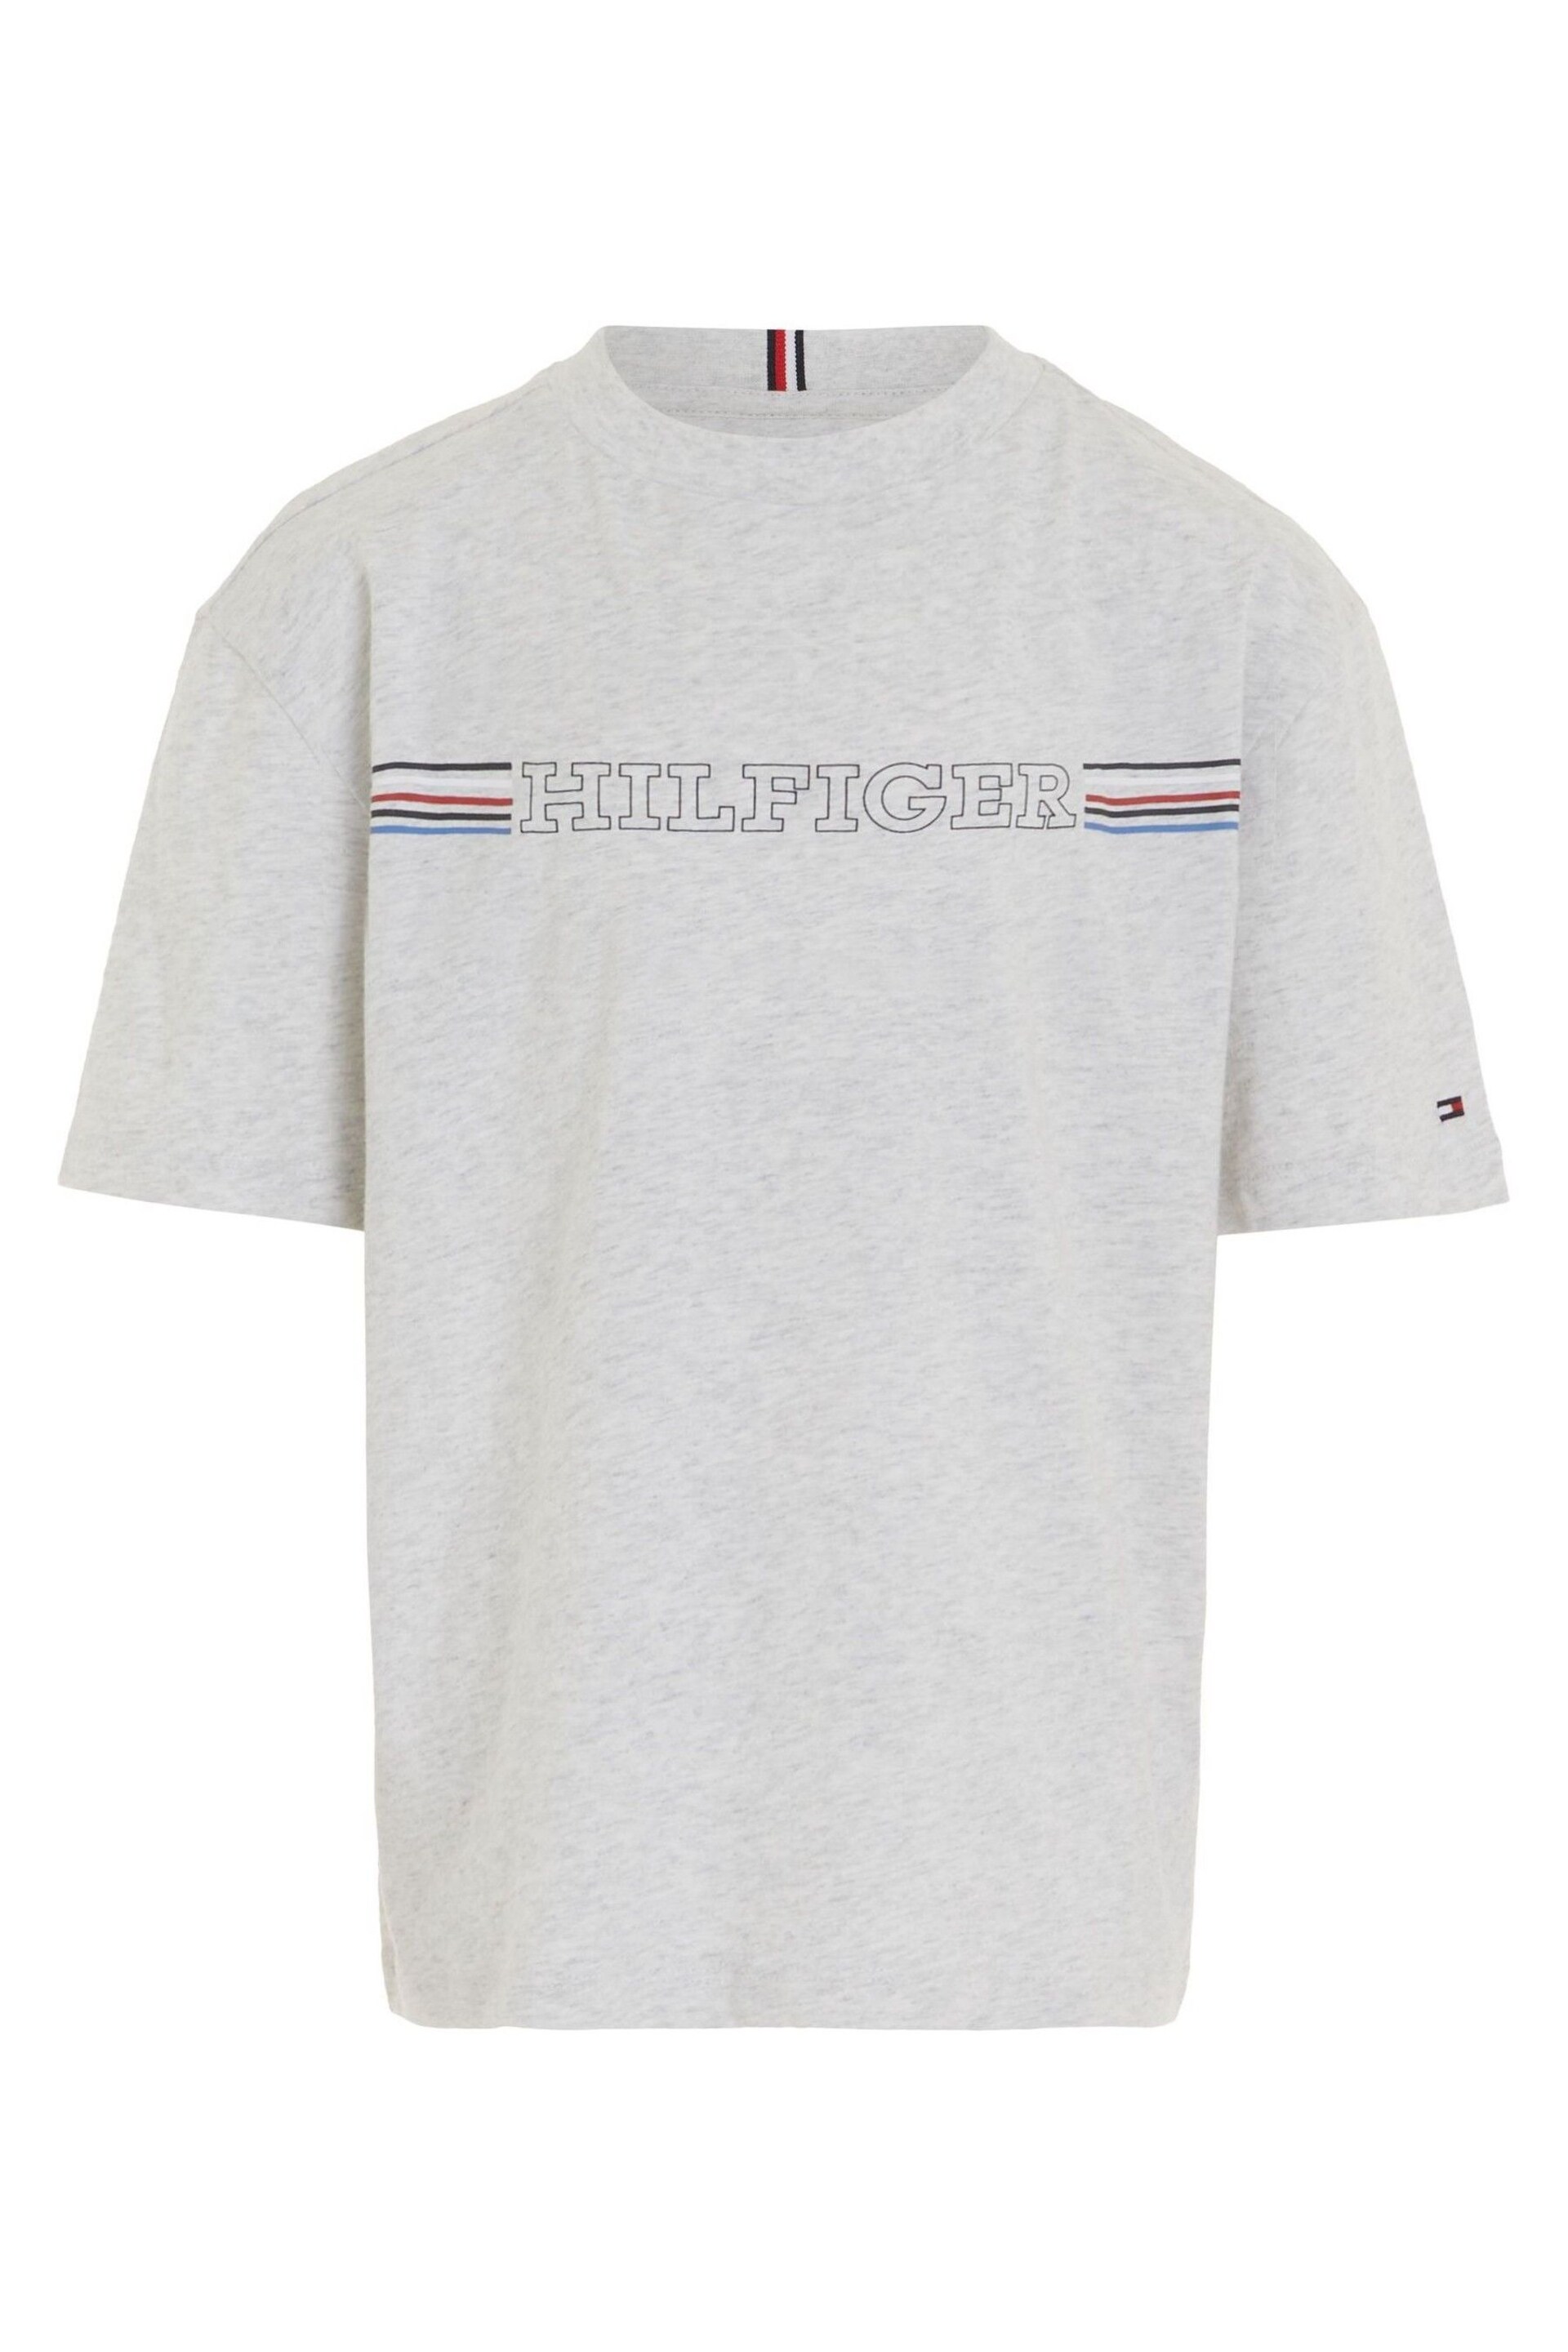 Tommy Hilfiger Grey Stripe Logo T-Shirt - Image 4 of 6